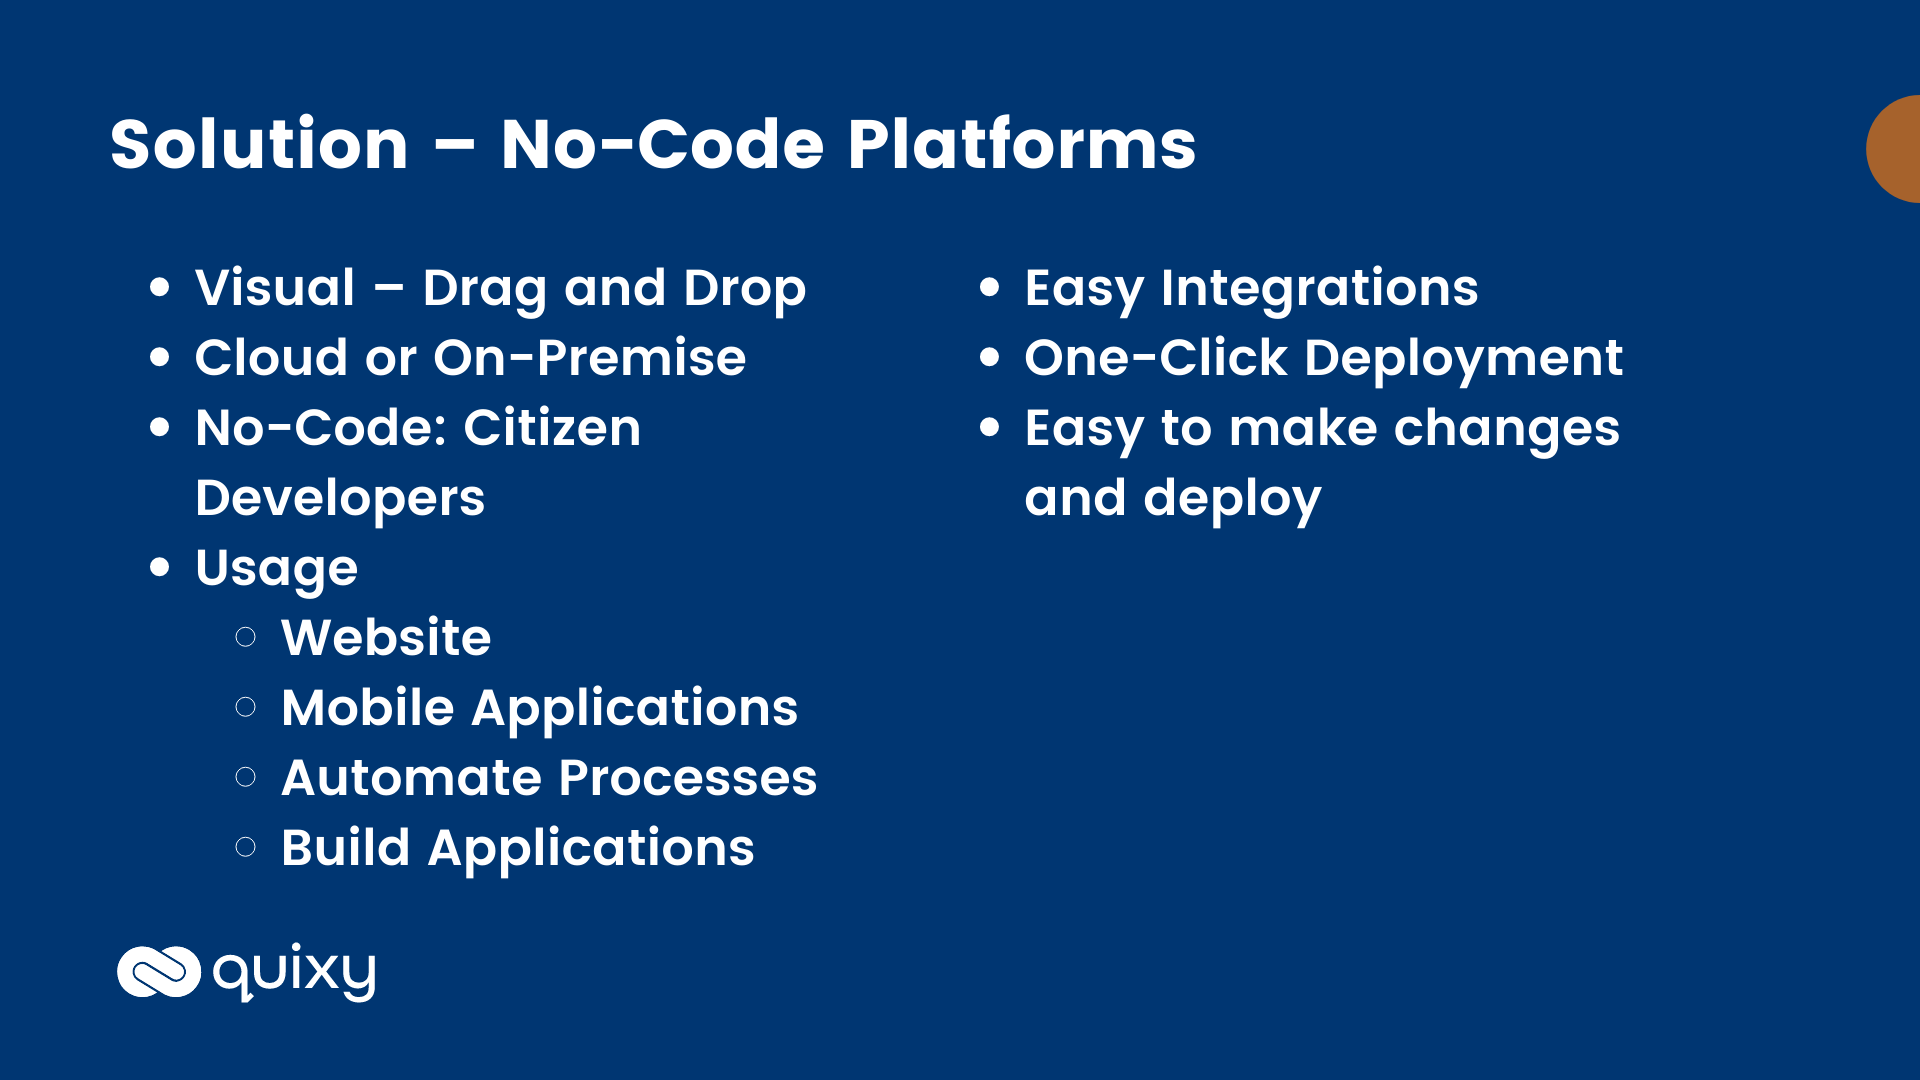 Quixy Solution No-Code Platforms